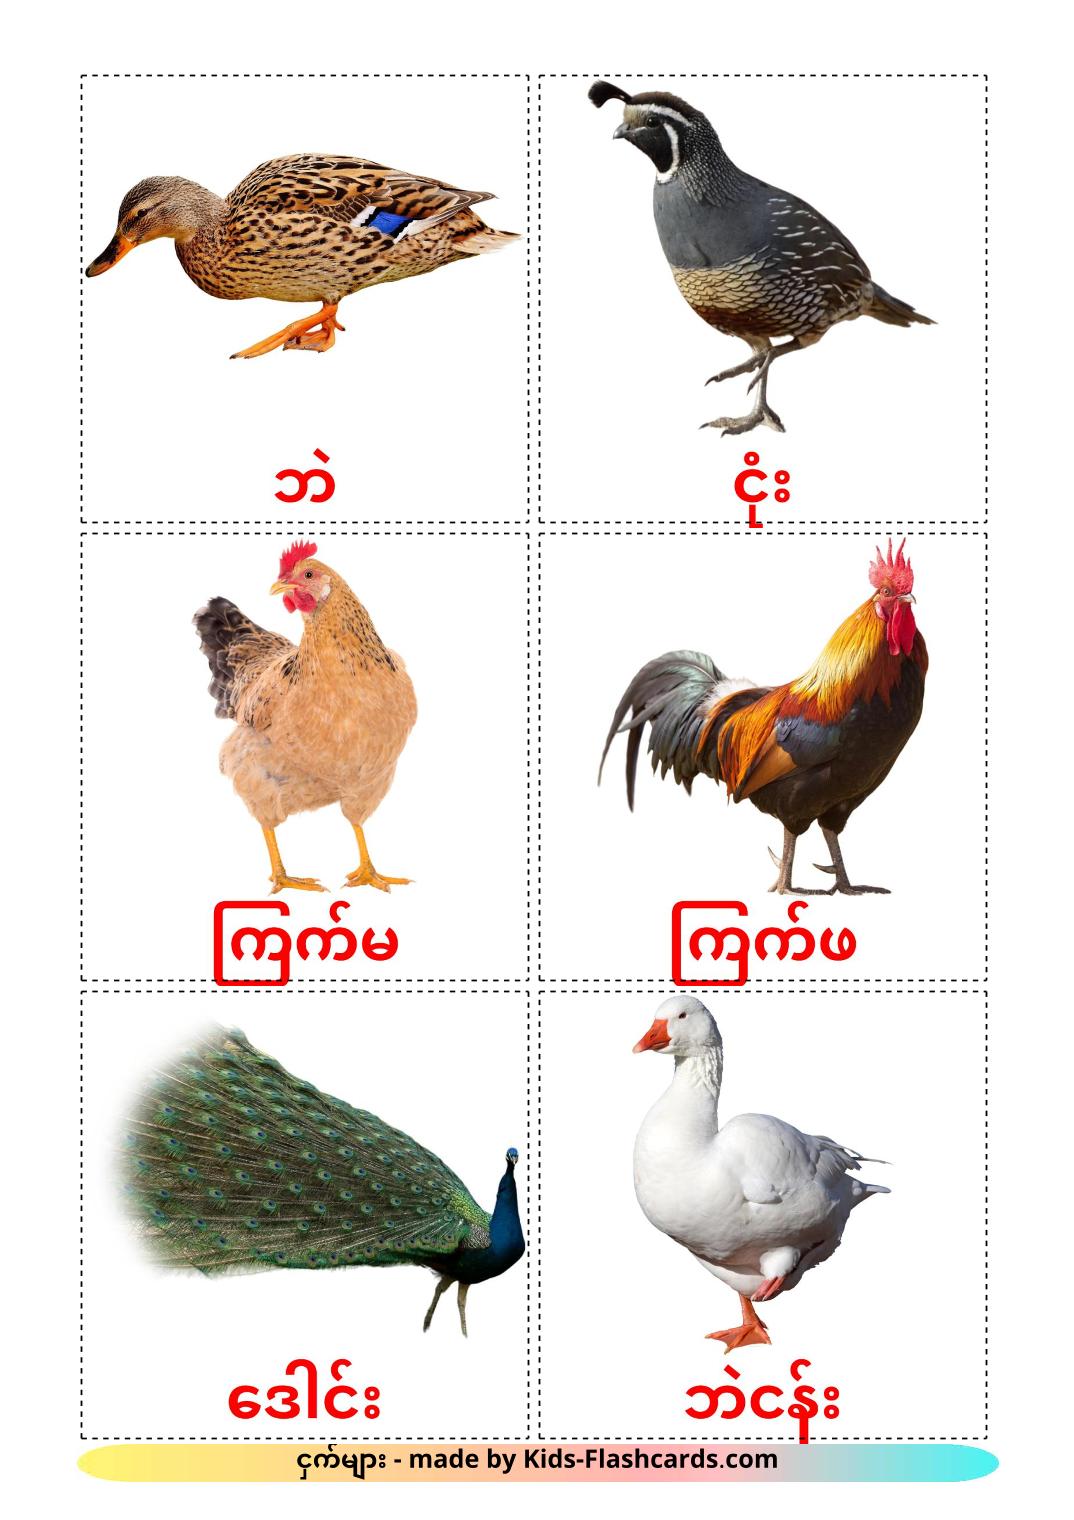 Aves de granja - 11 fichas de birmano para imprimir gratis 